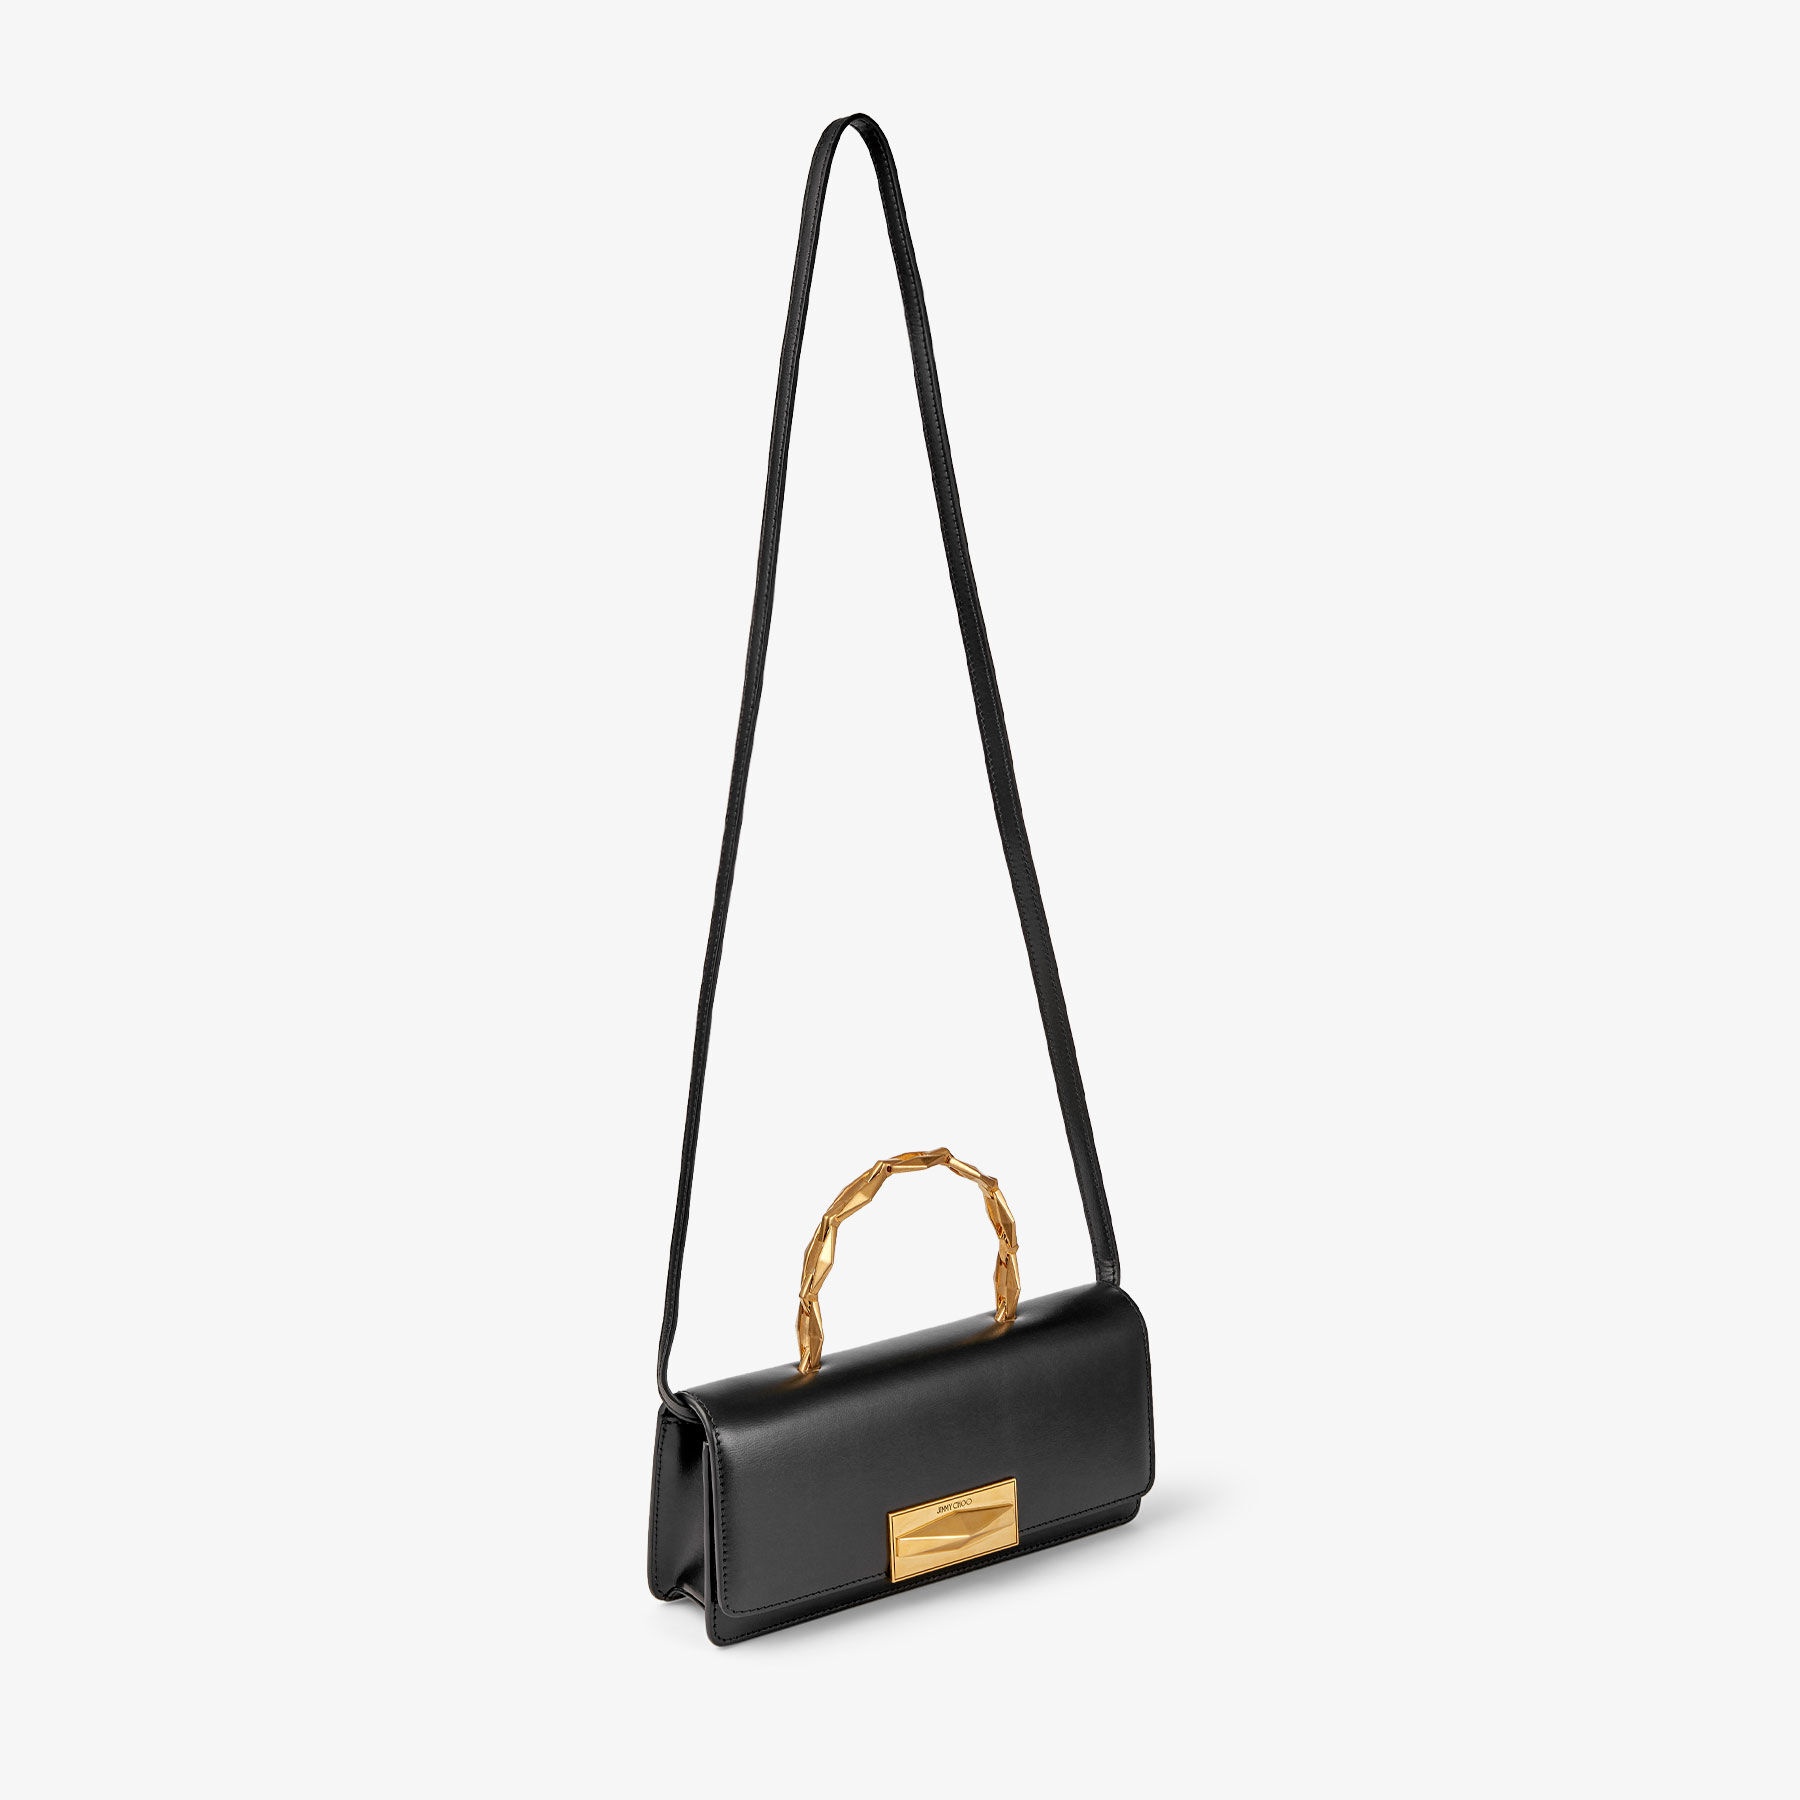 Diamond Chain Top Handle
Black Calf Leather Top Handle Bag - 5